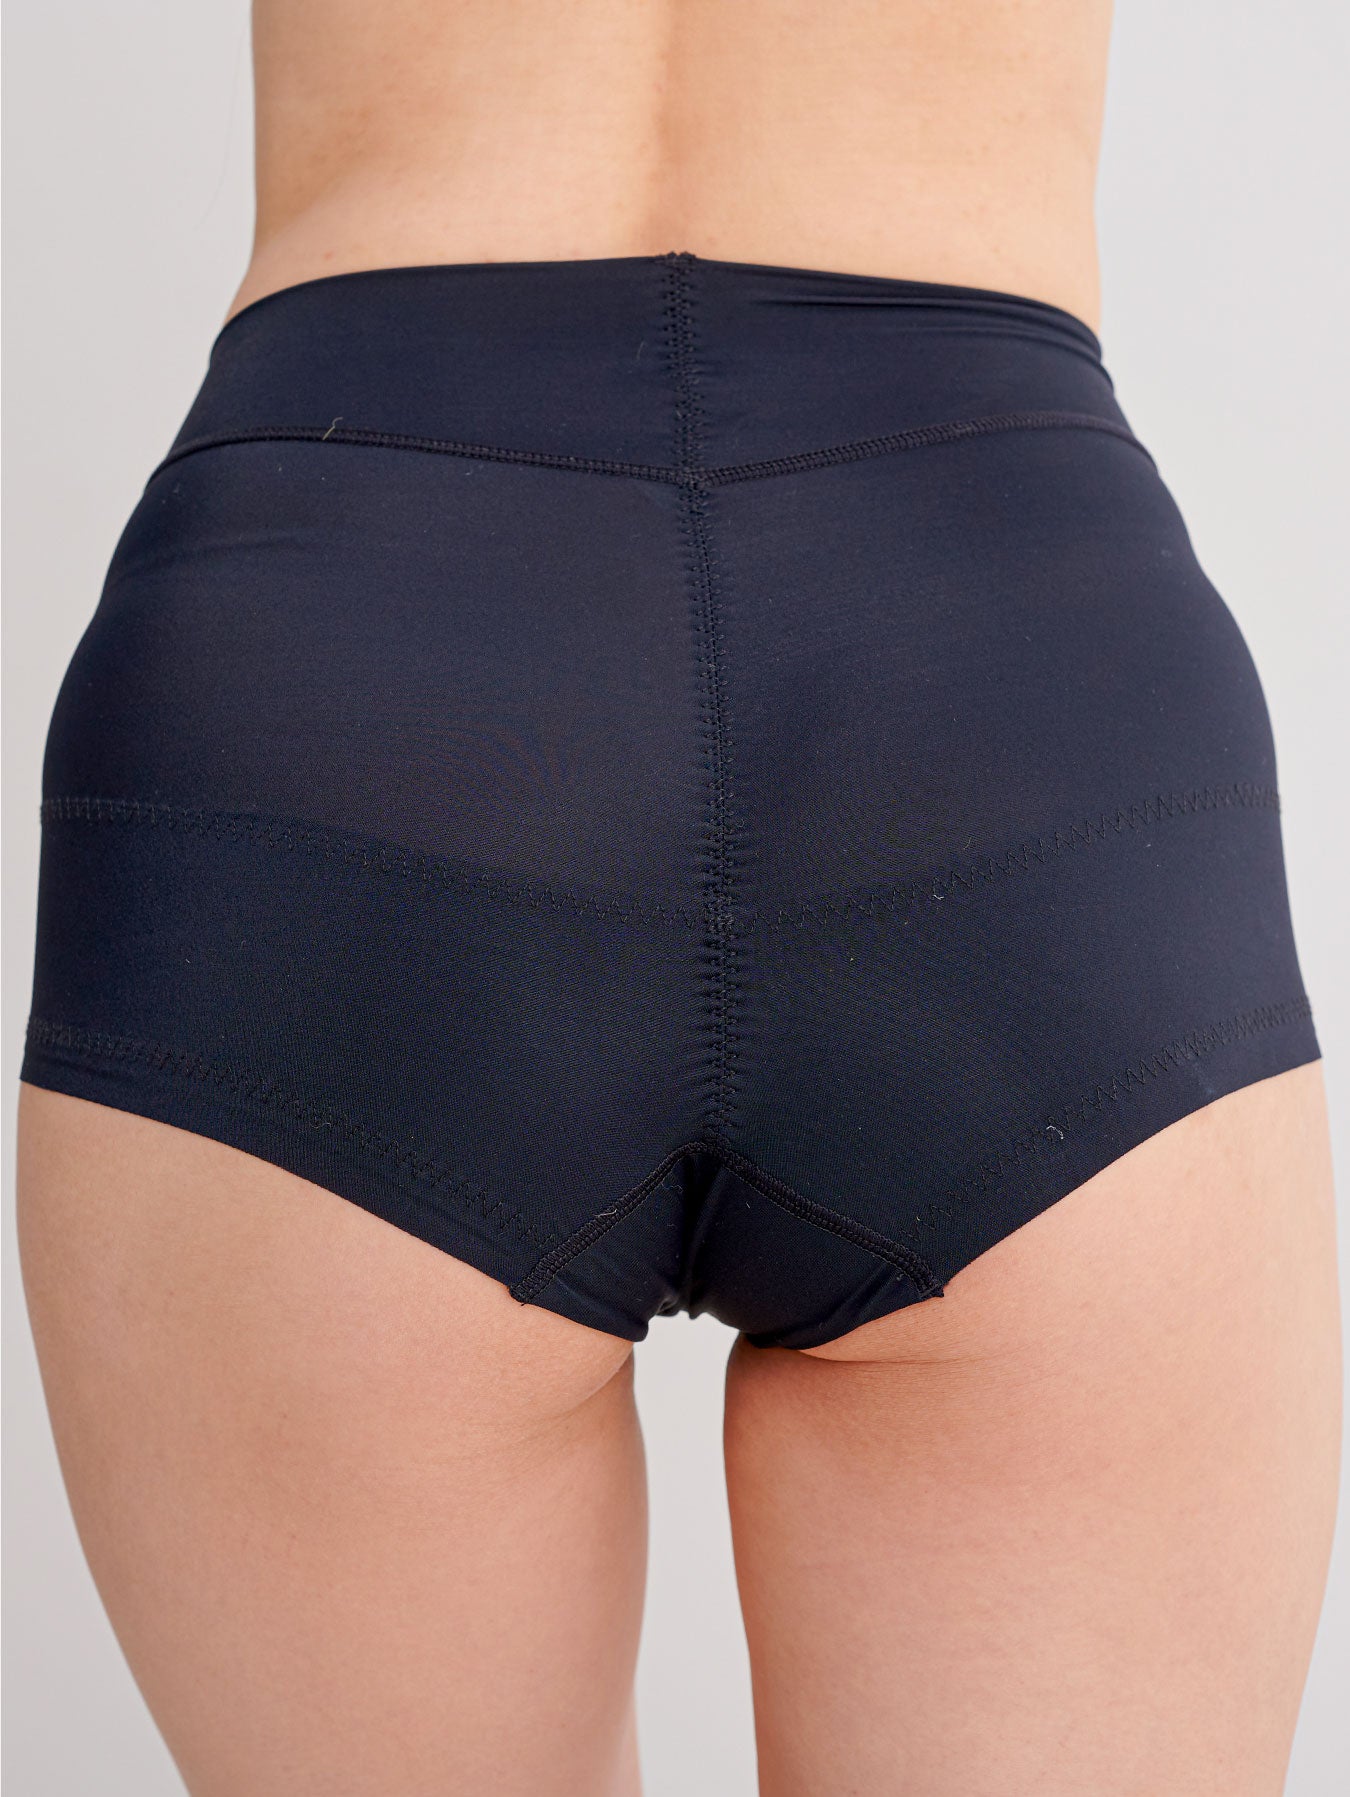 Low Waist Seamless Abdomen Hip Lifting Body Shaping Safety Pants –  Inujirushi